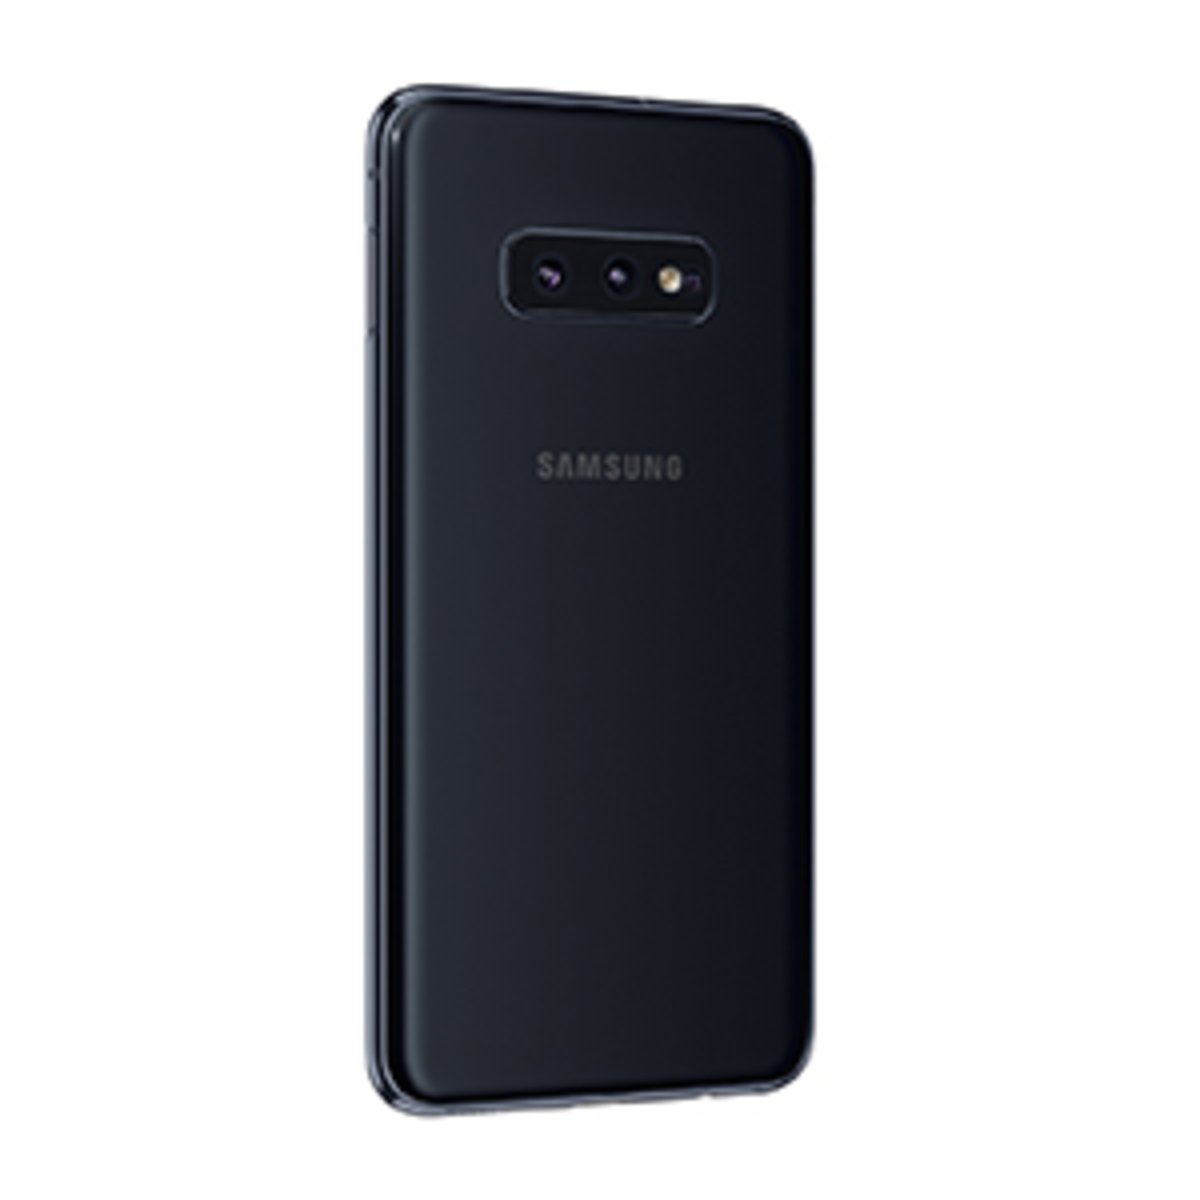 Samsung Galaxy S10e SM-G970 128GB Black